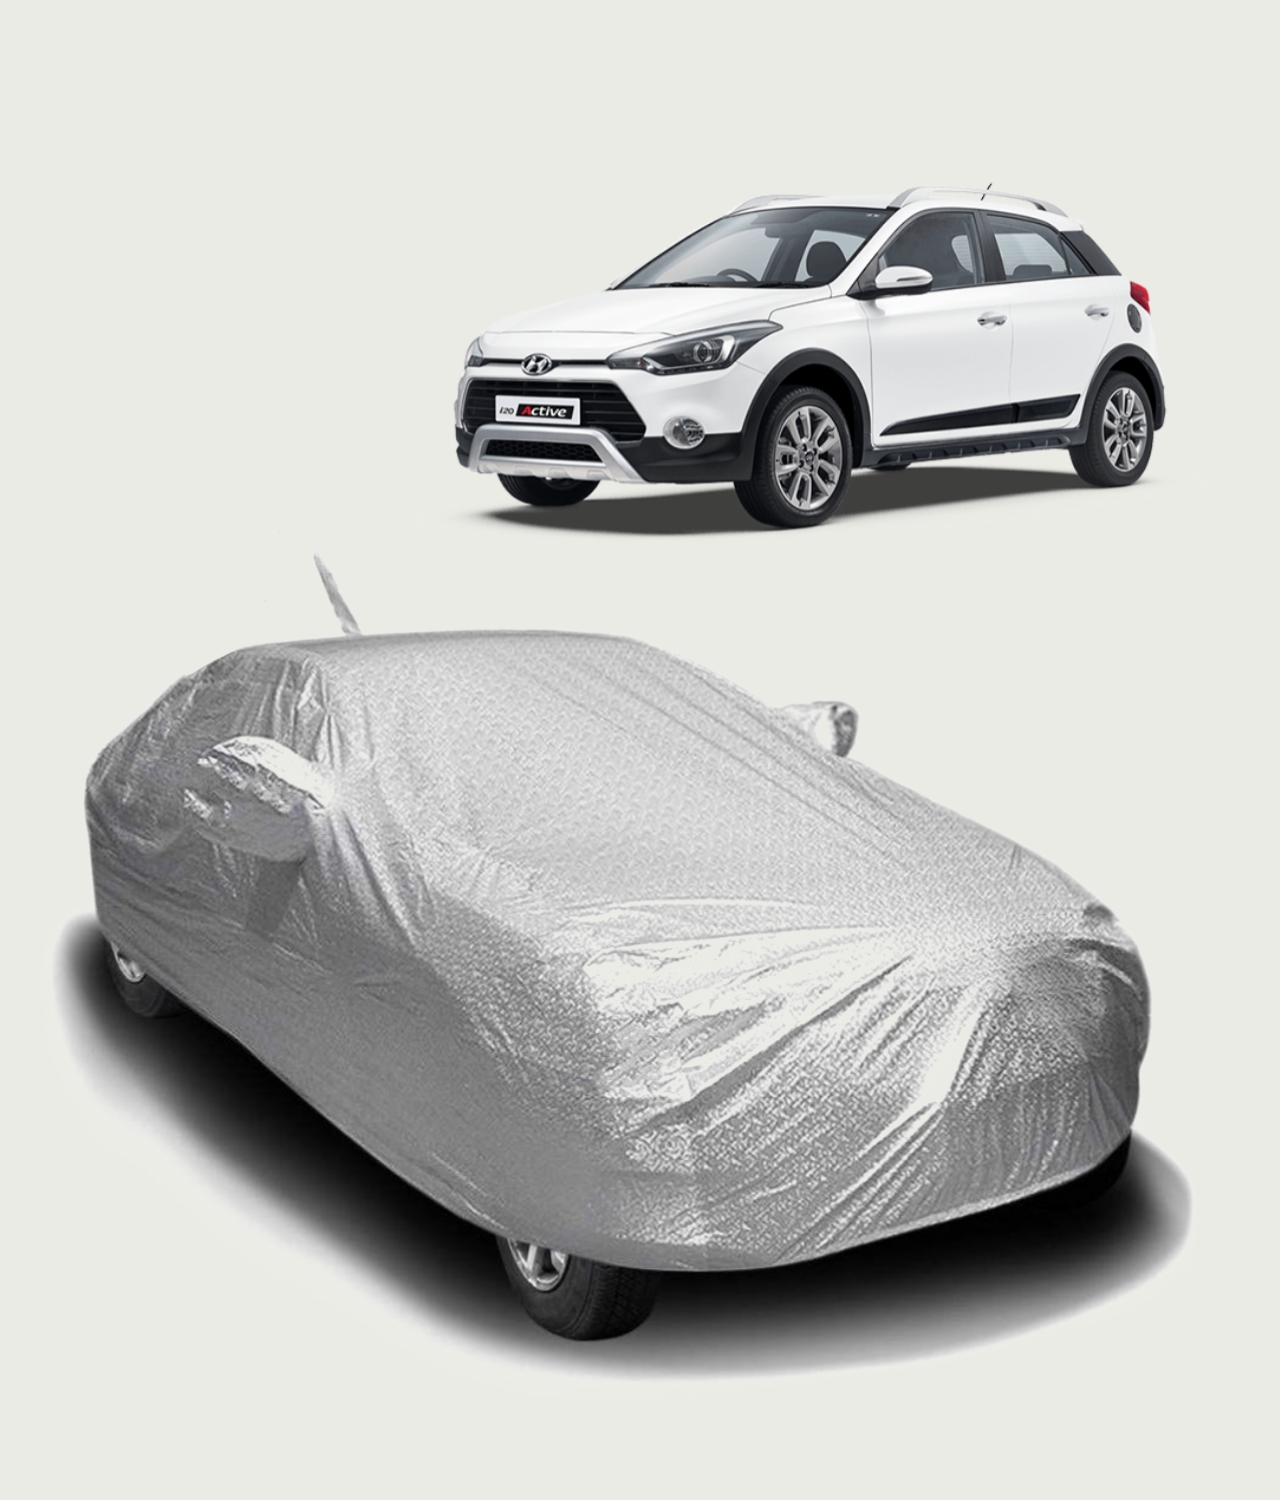 Hyundai i20 Active Premium Silver Outdoor Car Cover - Nellai Tarpaulin